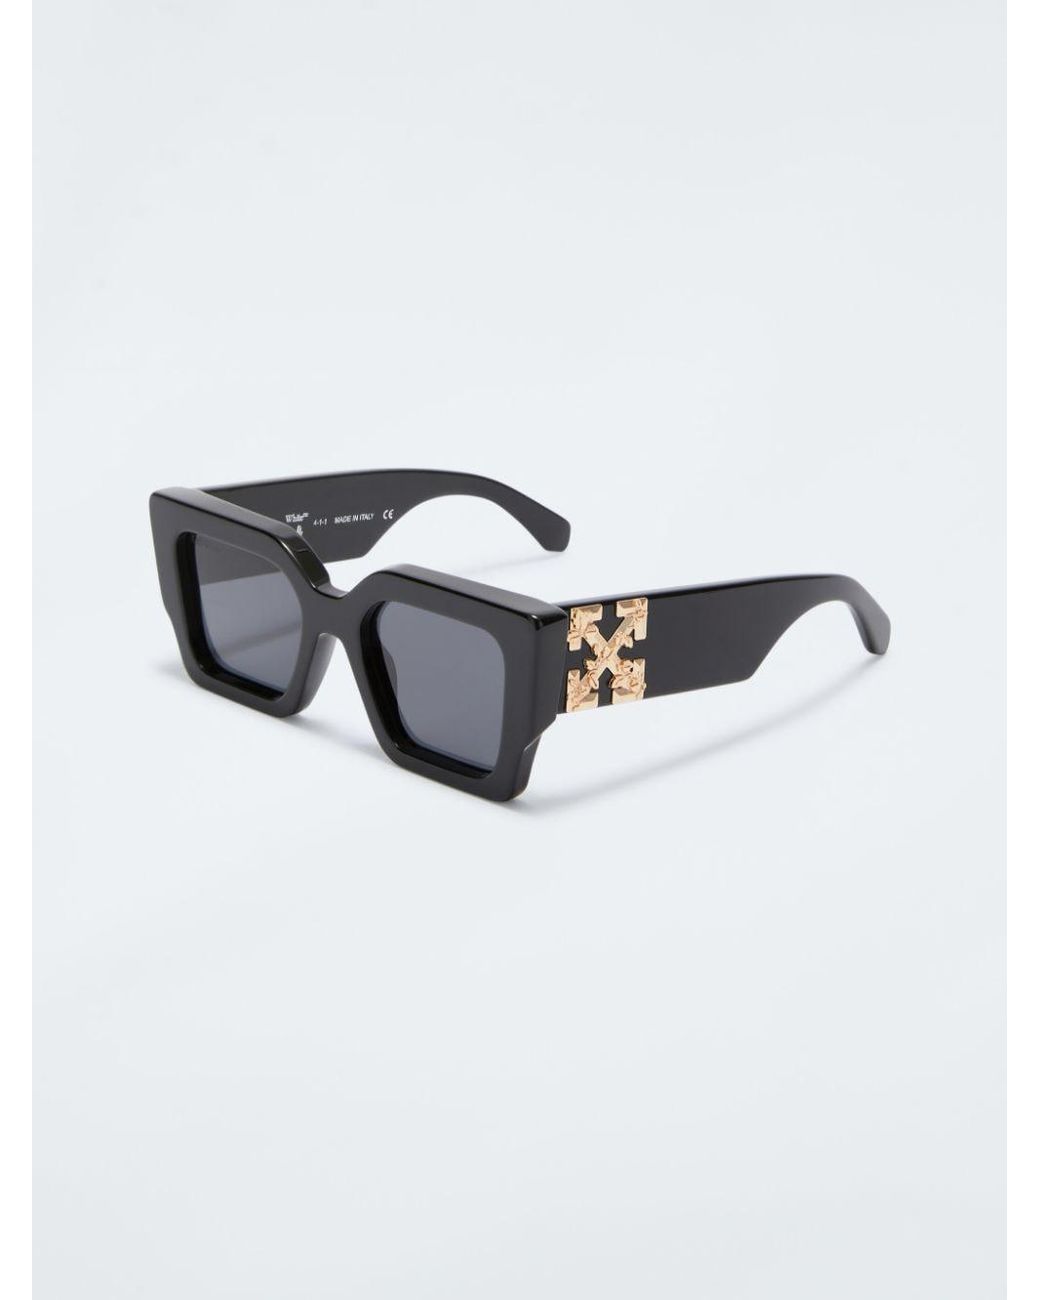 Sunglasses Off-White Black in Plastic - 33594963